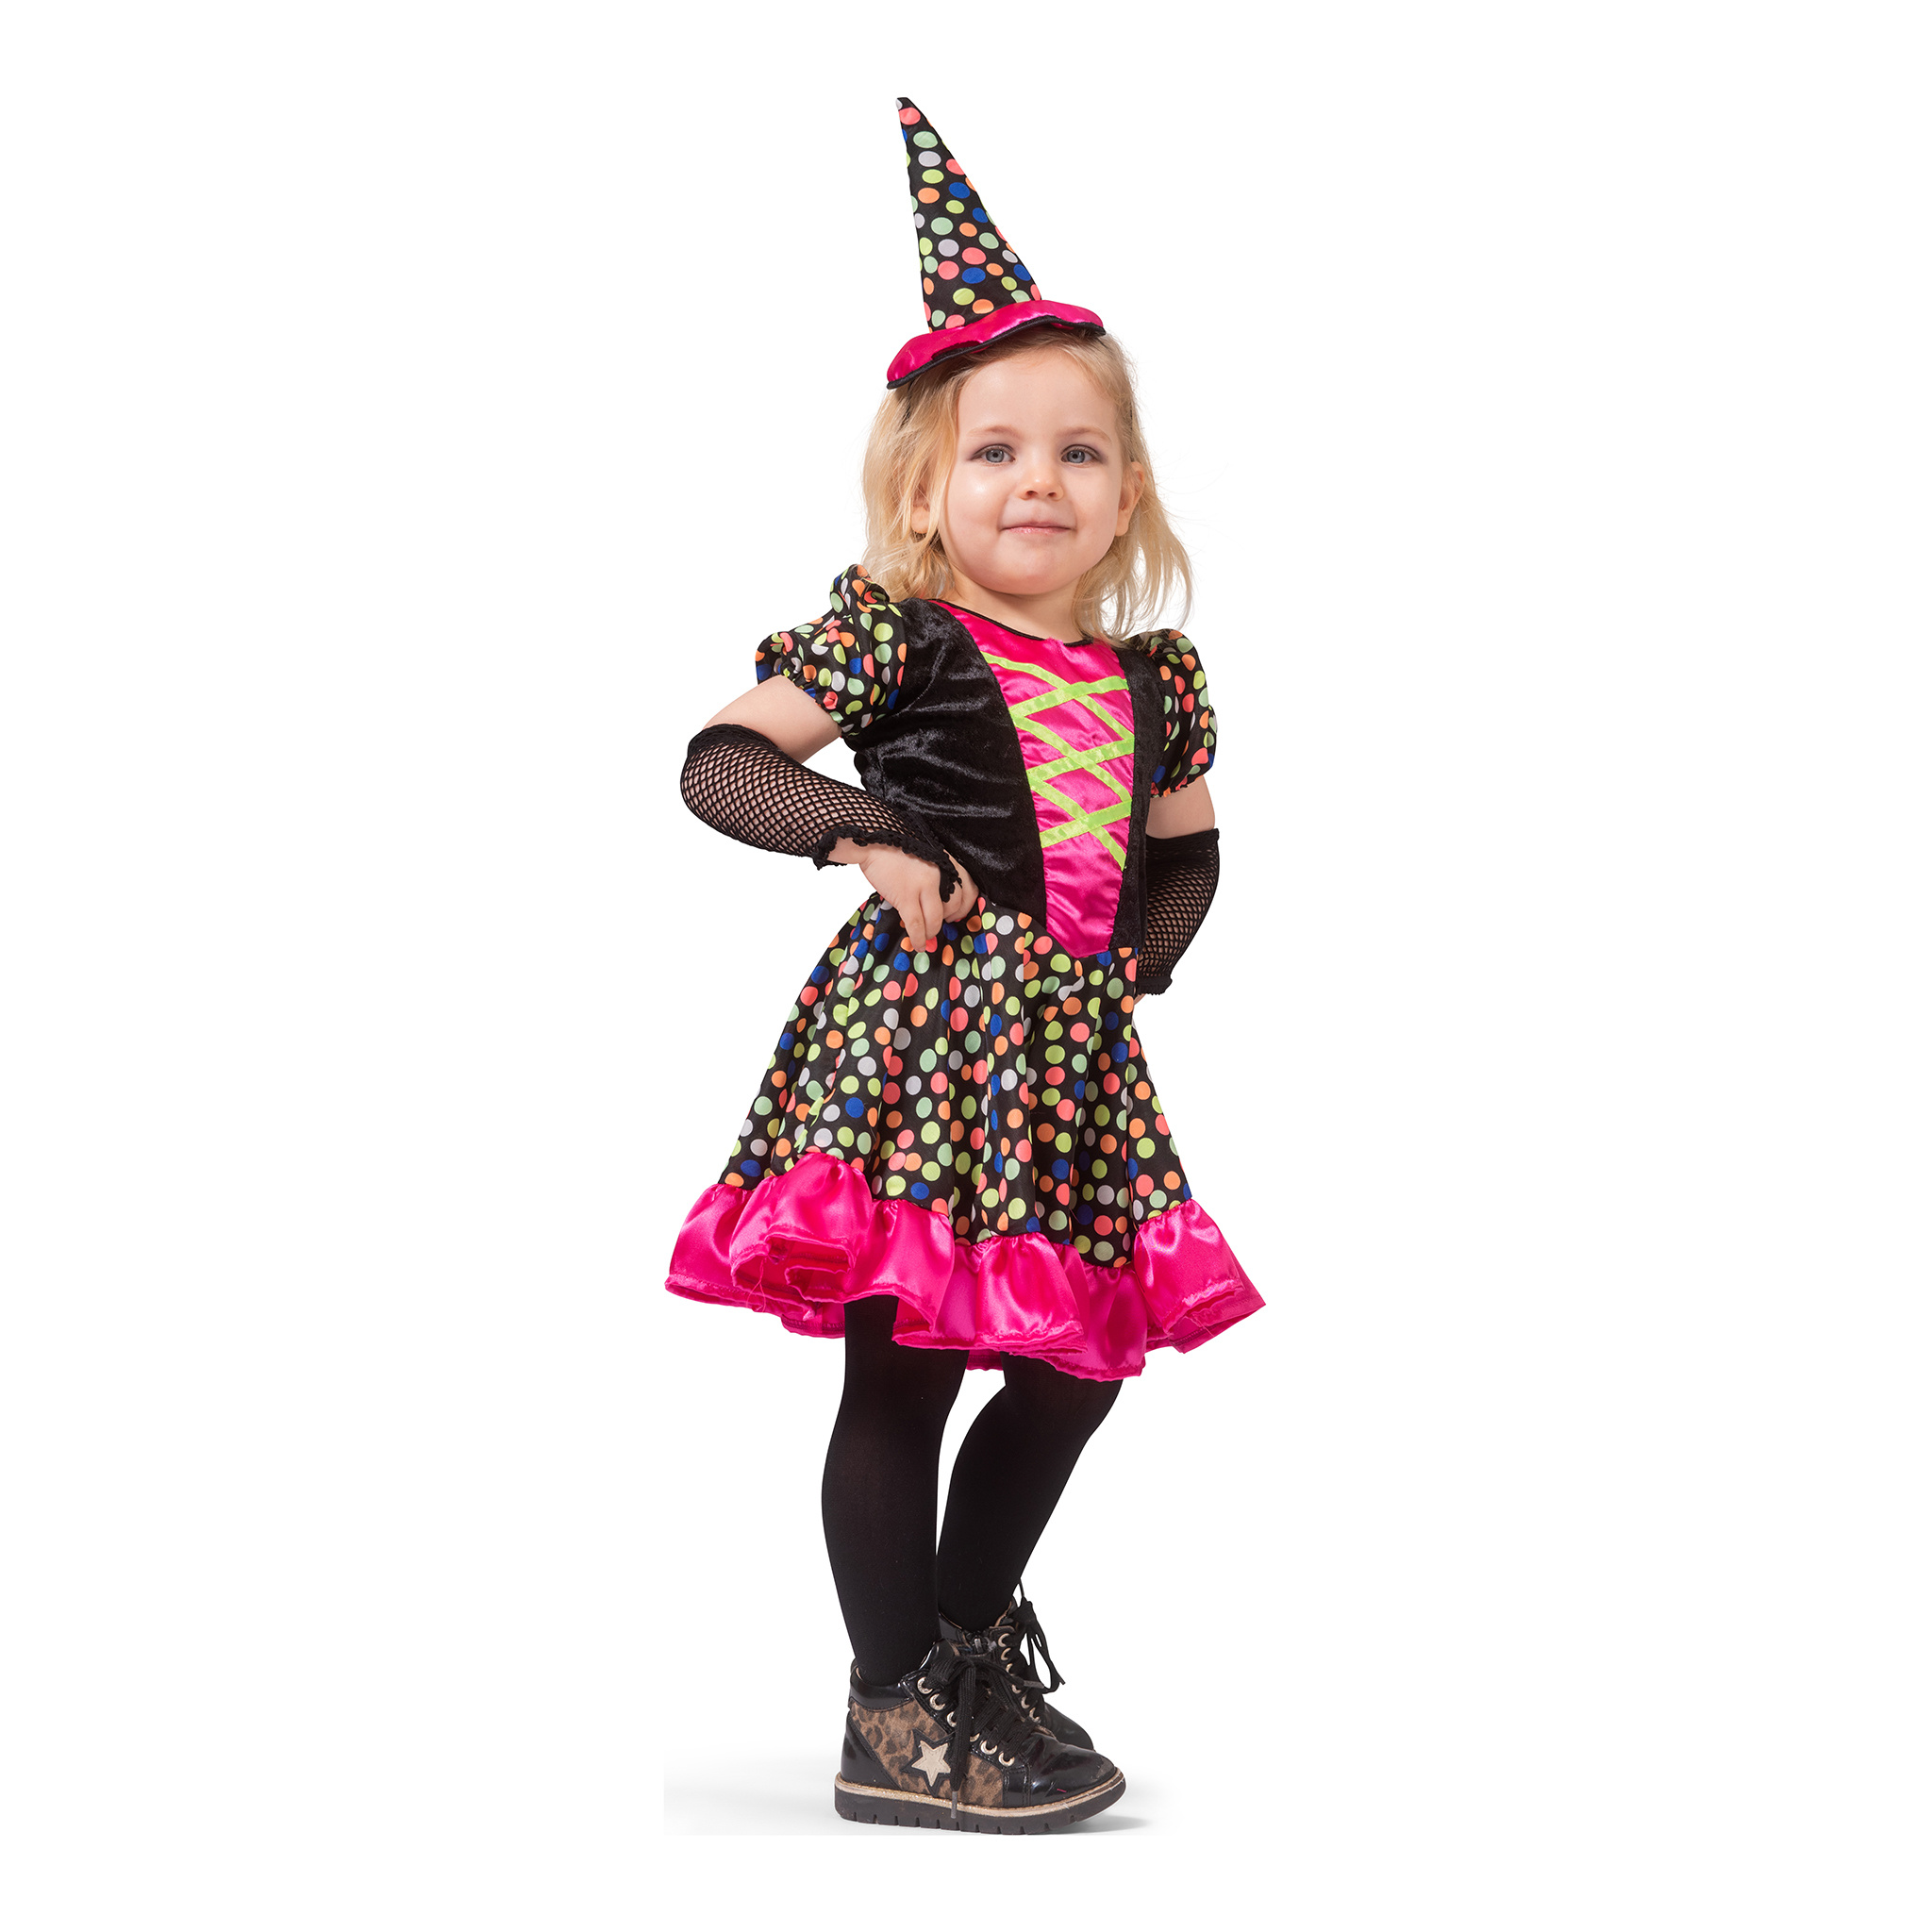 Funny Fashion - Heks & Spider Lady & Voodoo & Duistere Religie Kostuum - Betoverende Confetti Heks - Meisje - roze,zwart - Maat 92 - Halloween - Verkleedkleding